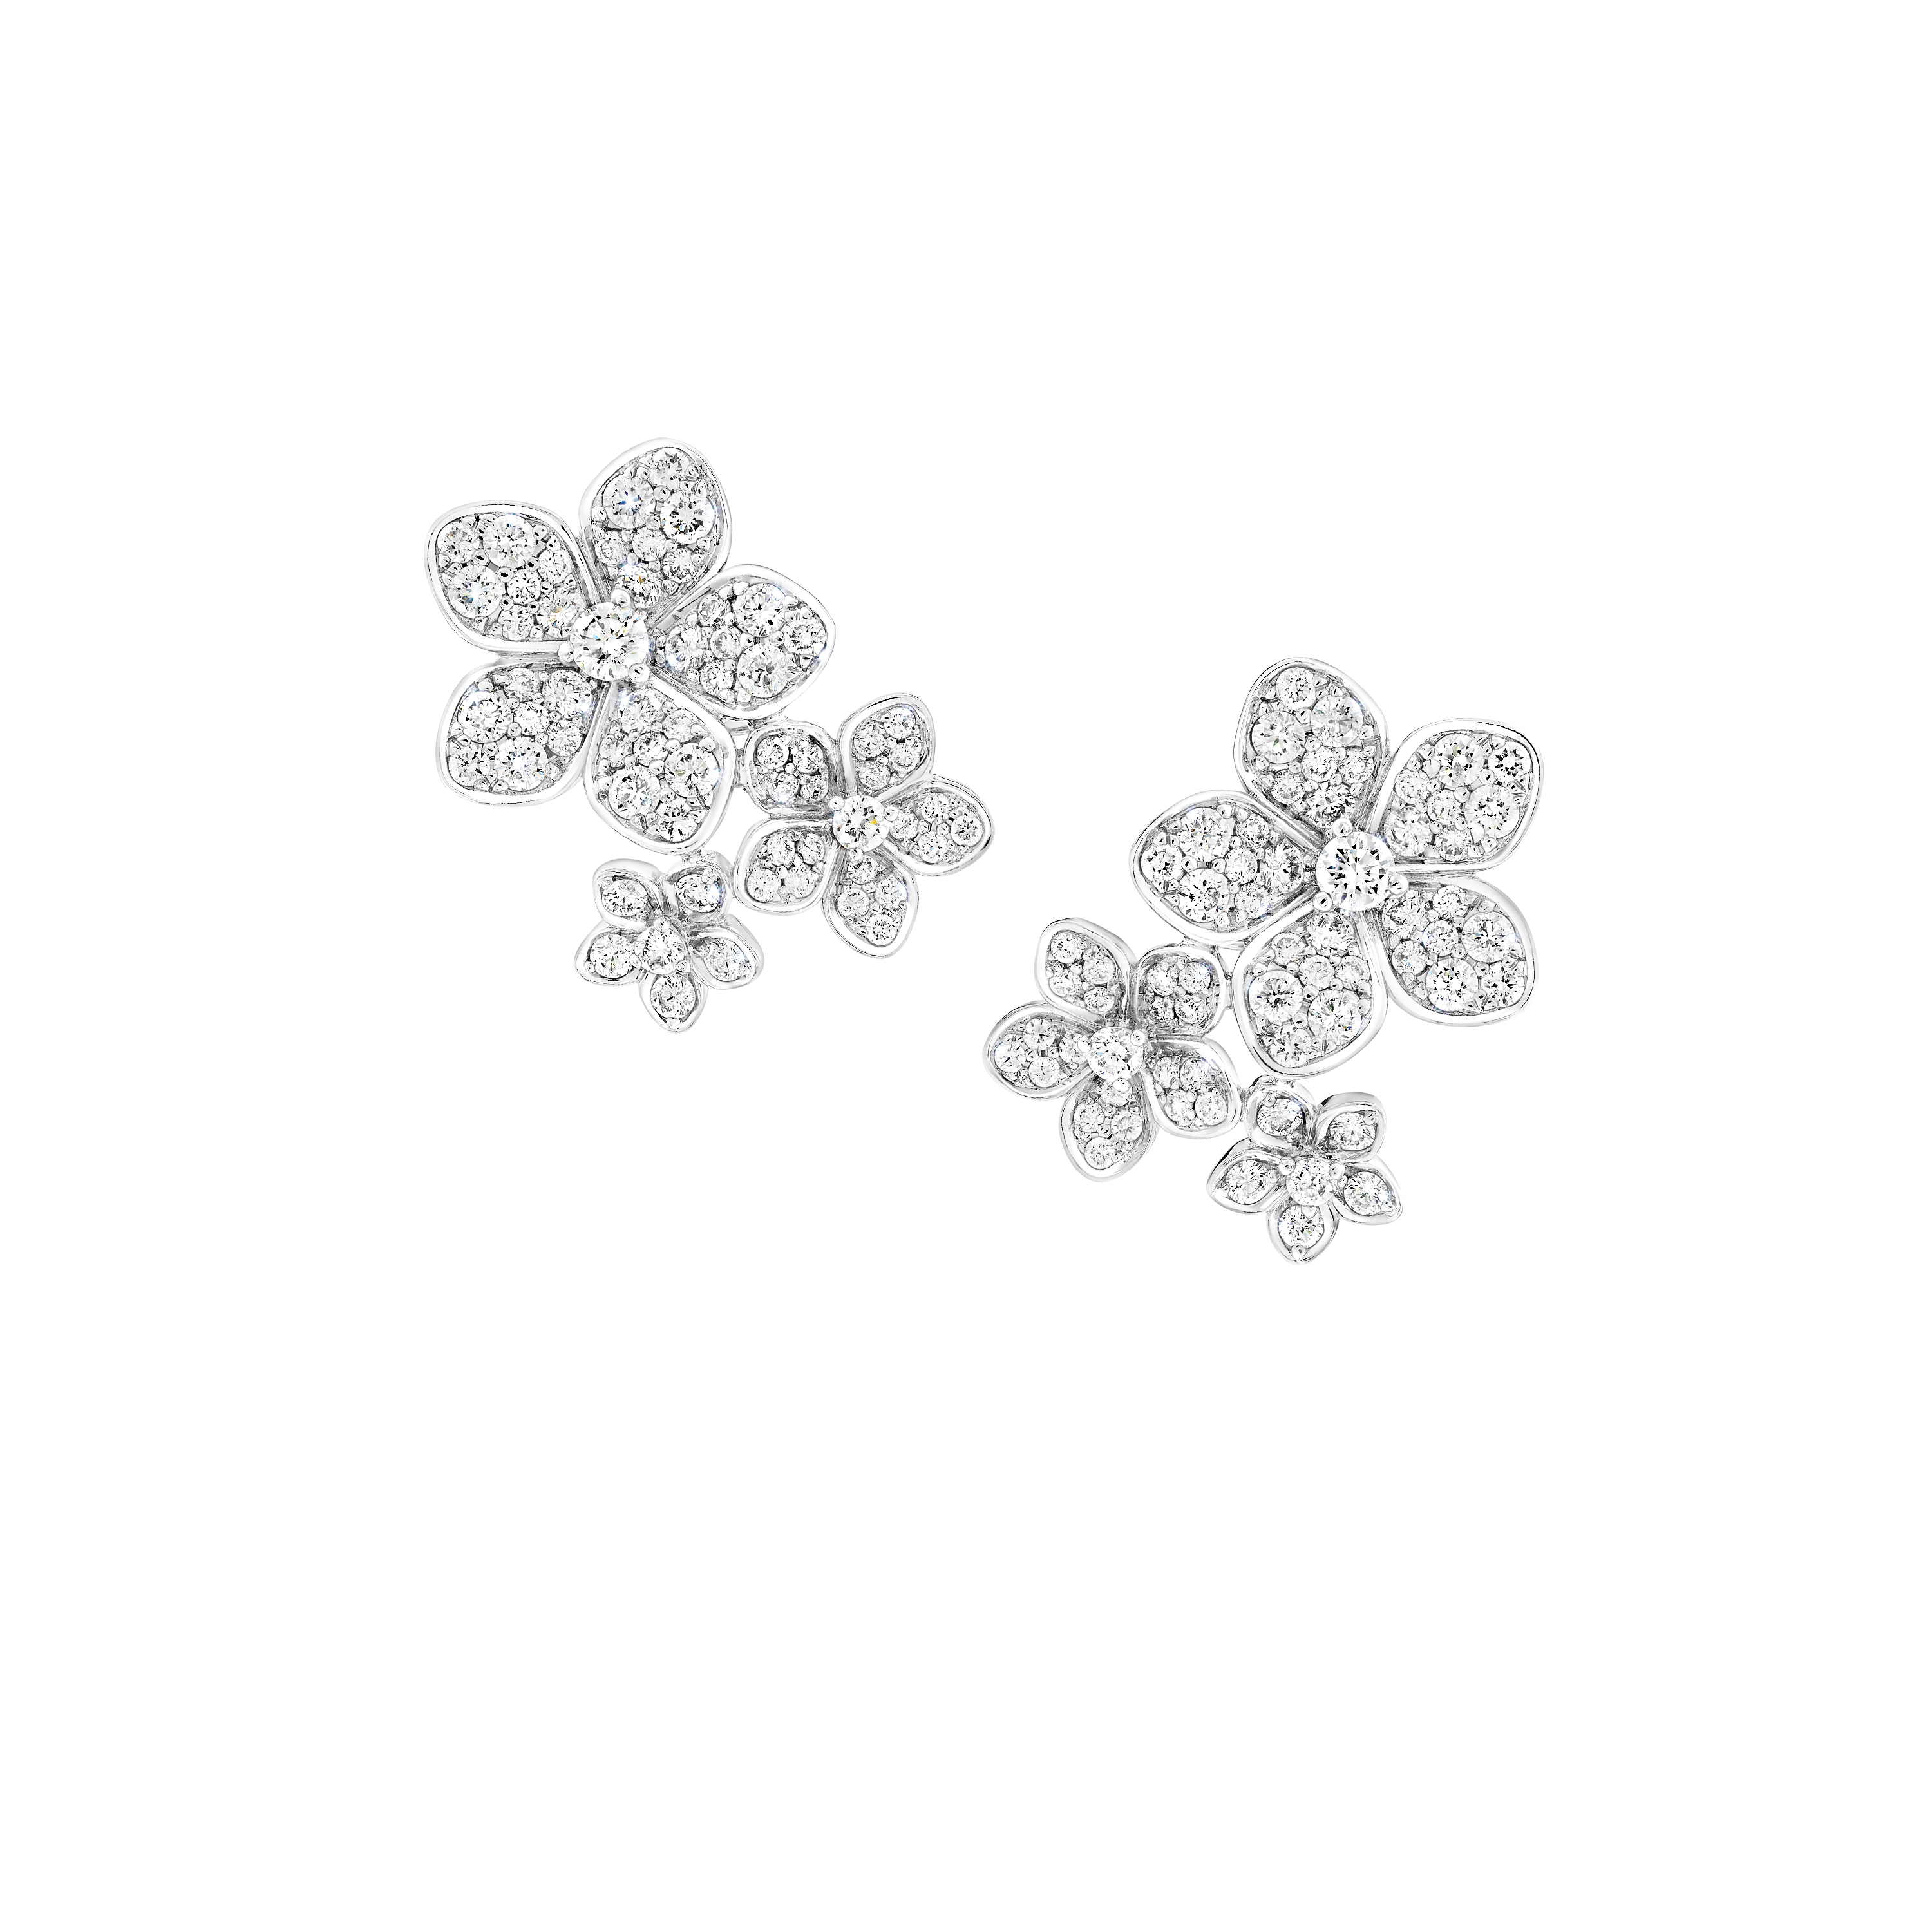 Wild Flower Diamond Cluster Stud Earrings